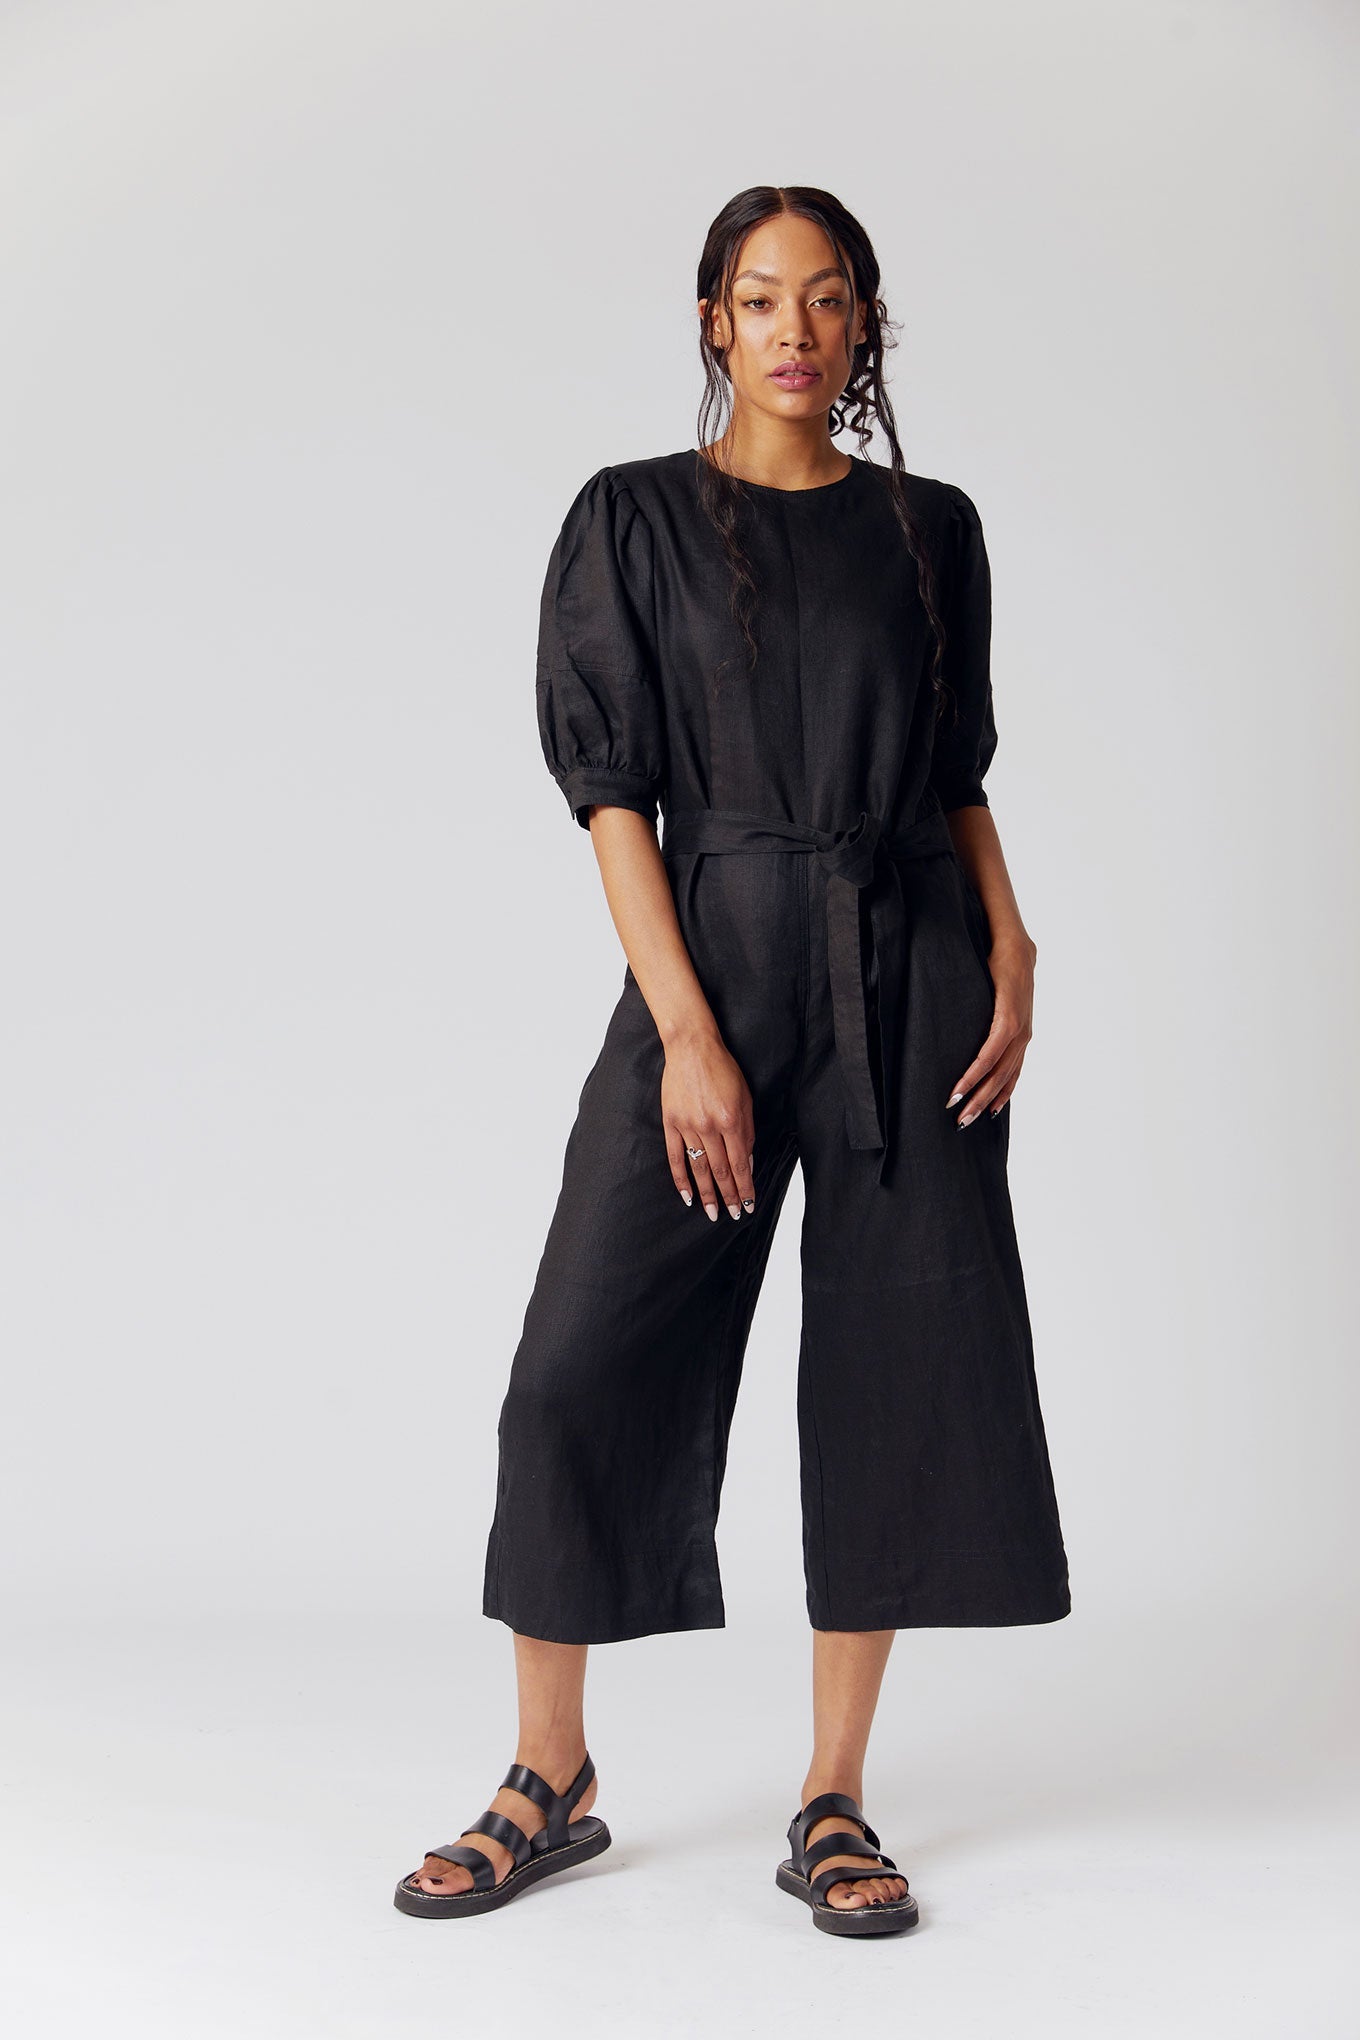 FAYE Organic Linen Jumpsuit Black, SIZE 1 / UK 8 / EUR 36